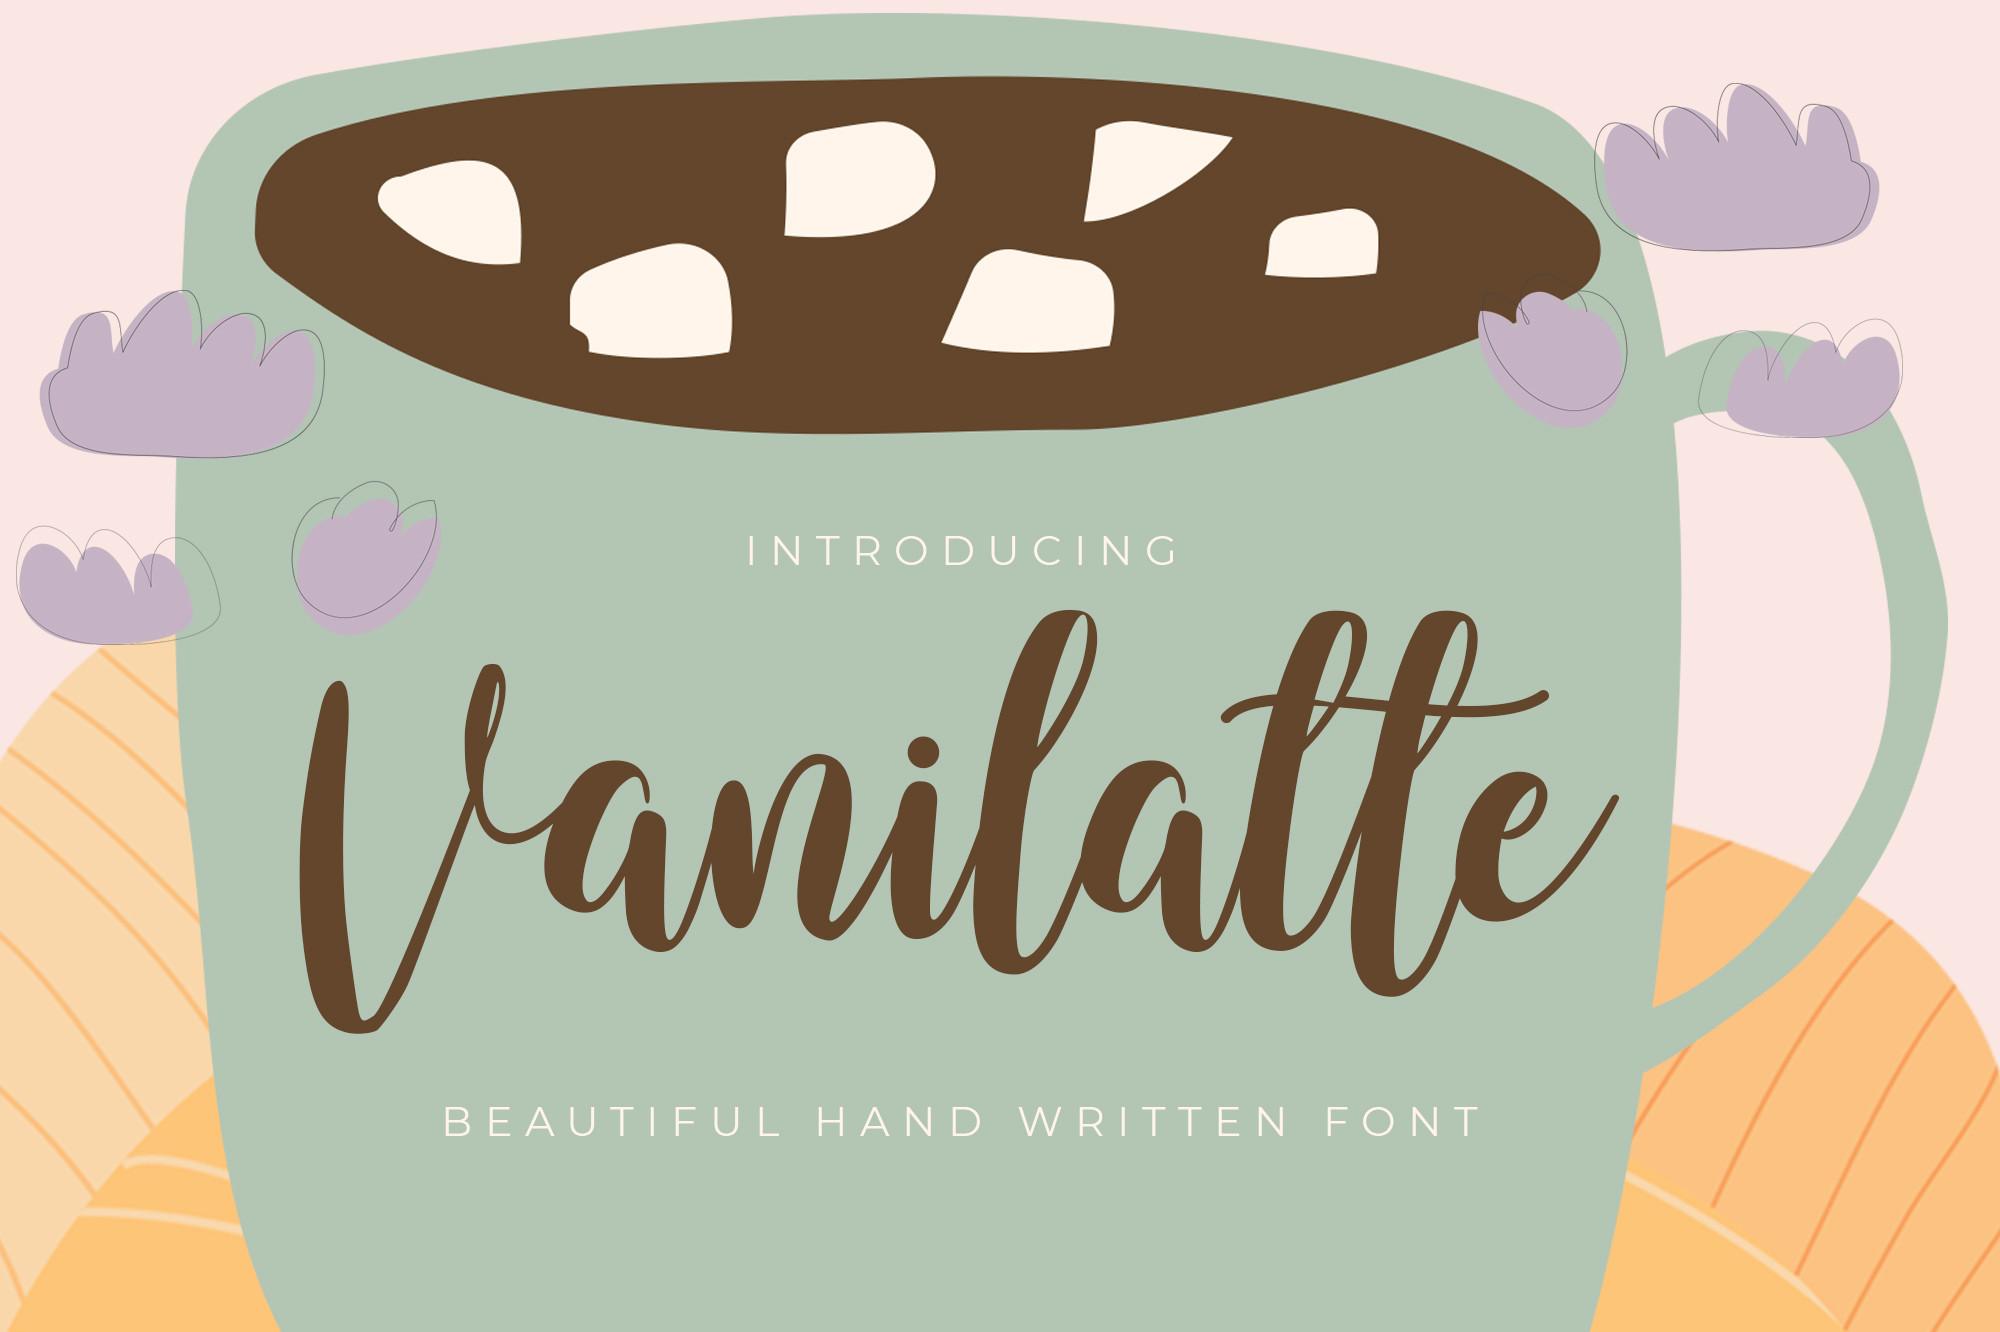 Vanilatte Font